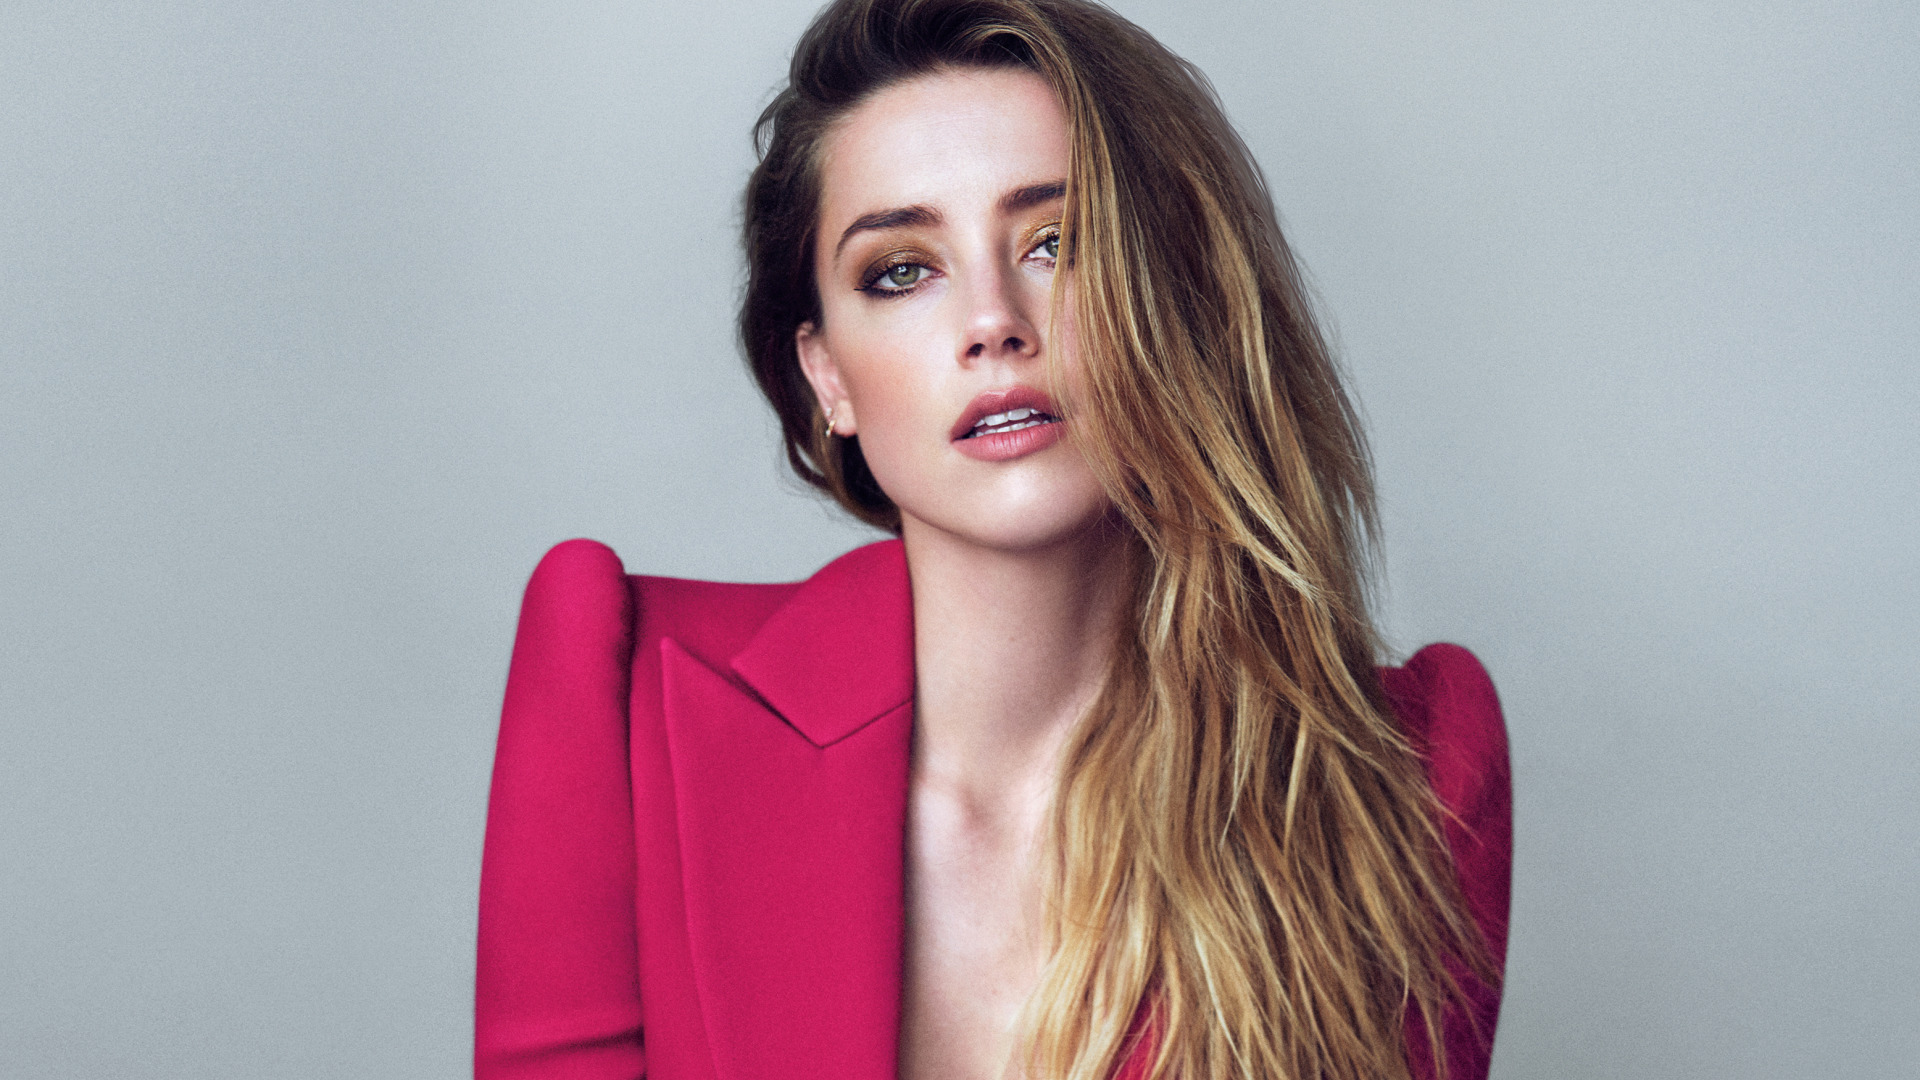 Download Wallpaper Makeup Actress Hairstyle Photoshoot Amber Heard Amber Heard Marie